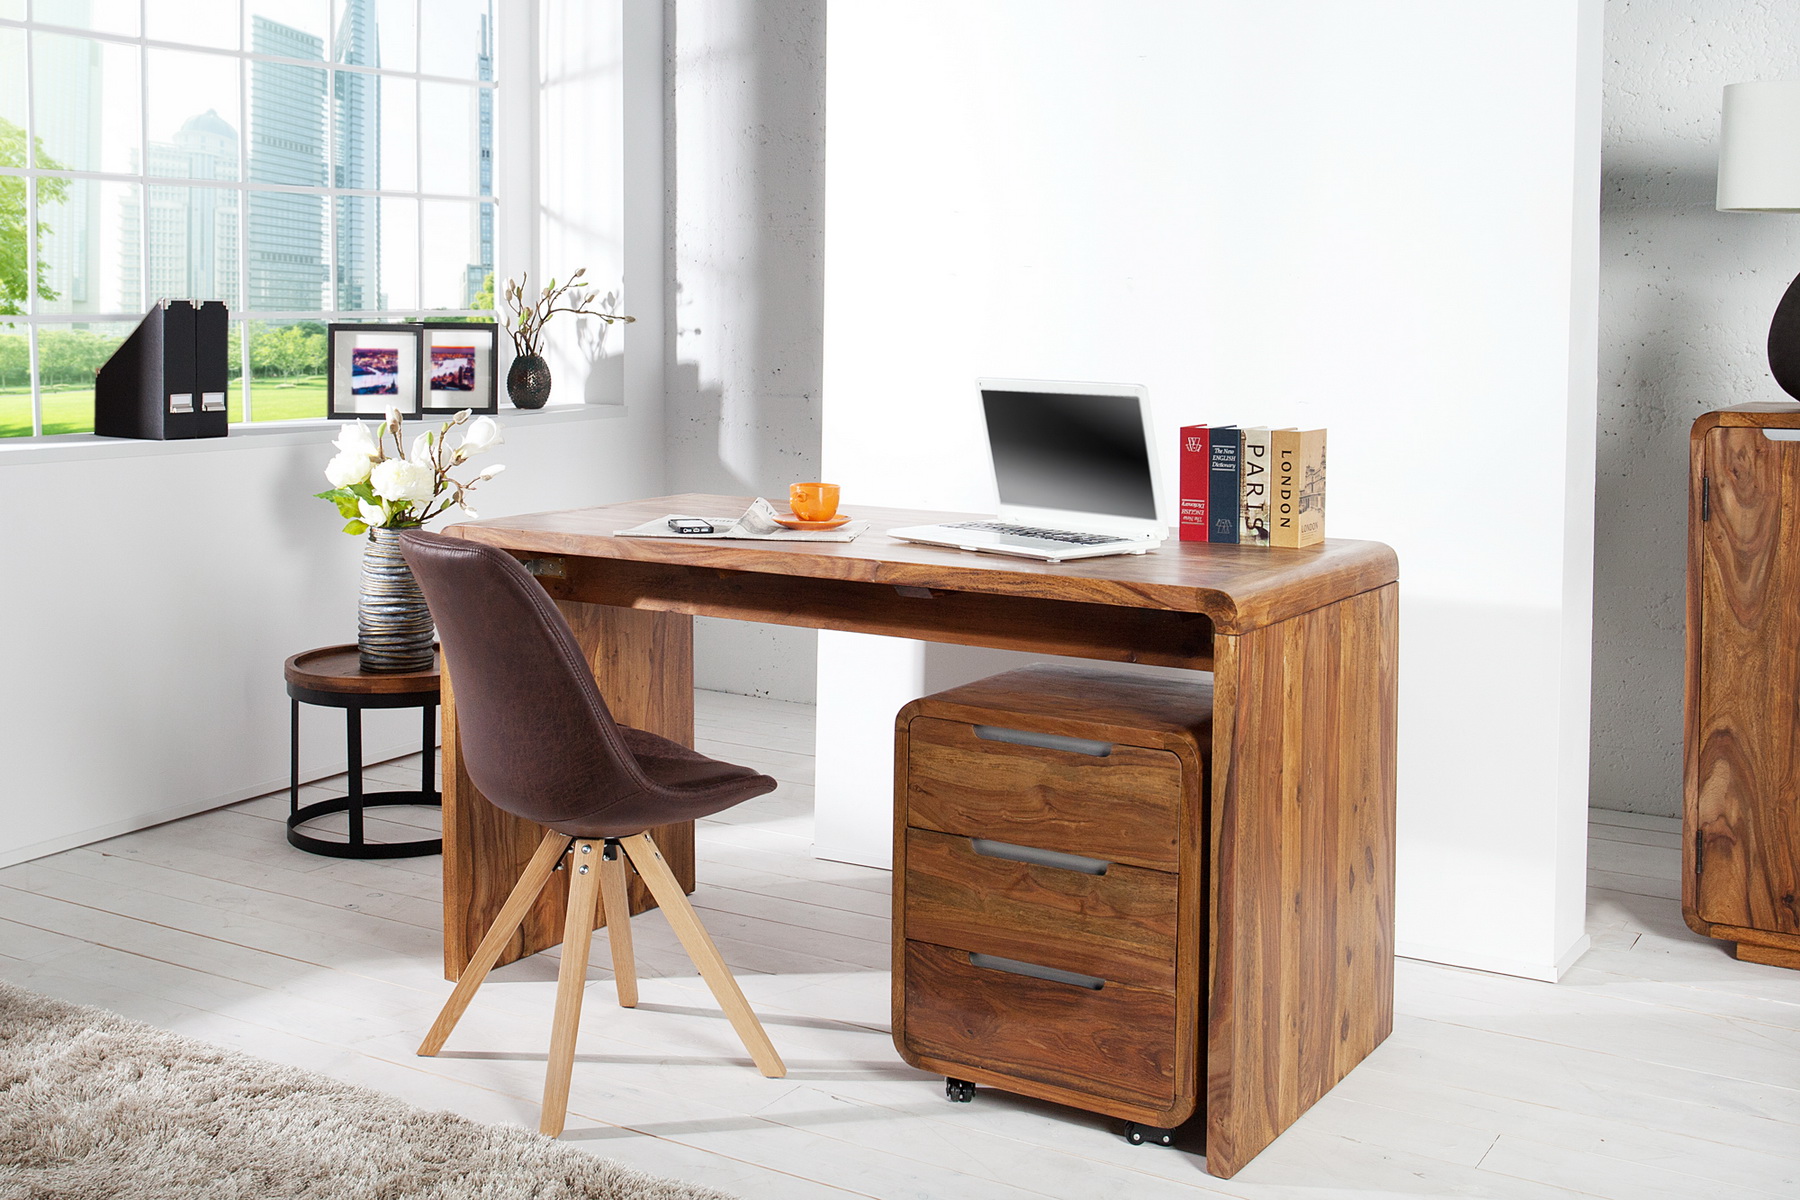 PC - stolík 35870 150x70cm Masív drevo Palisander